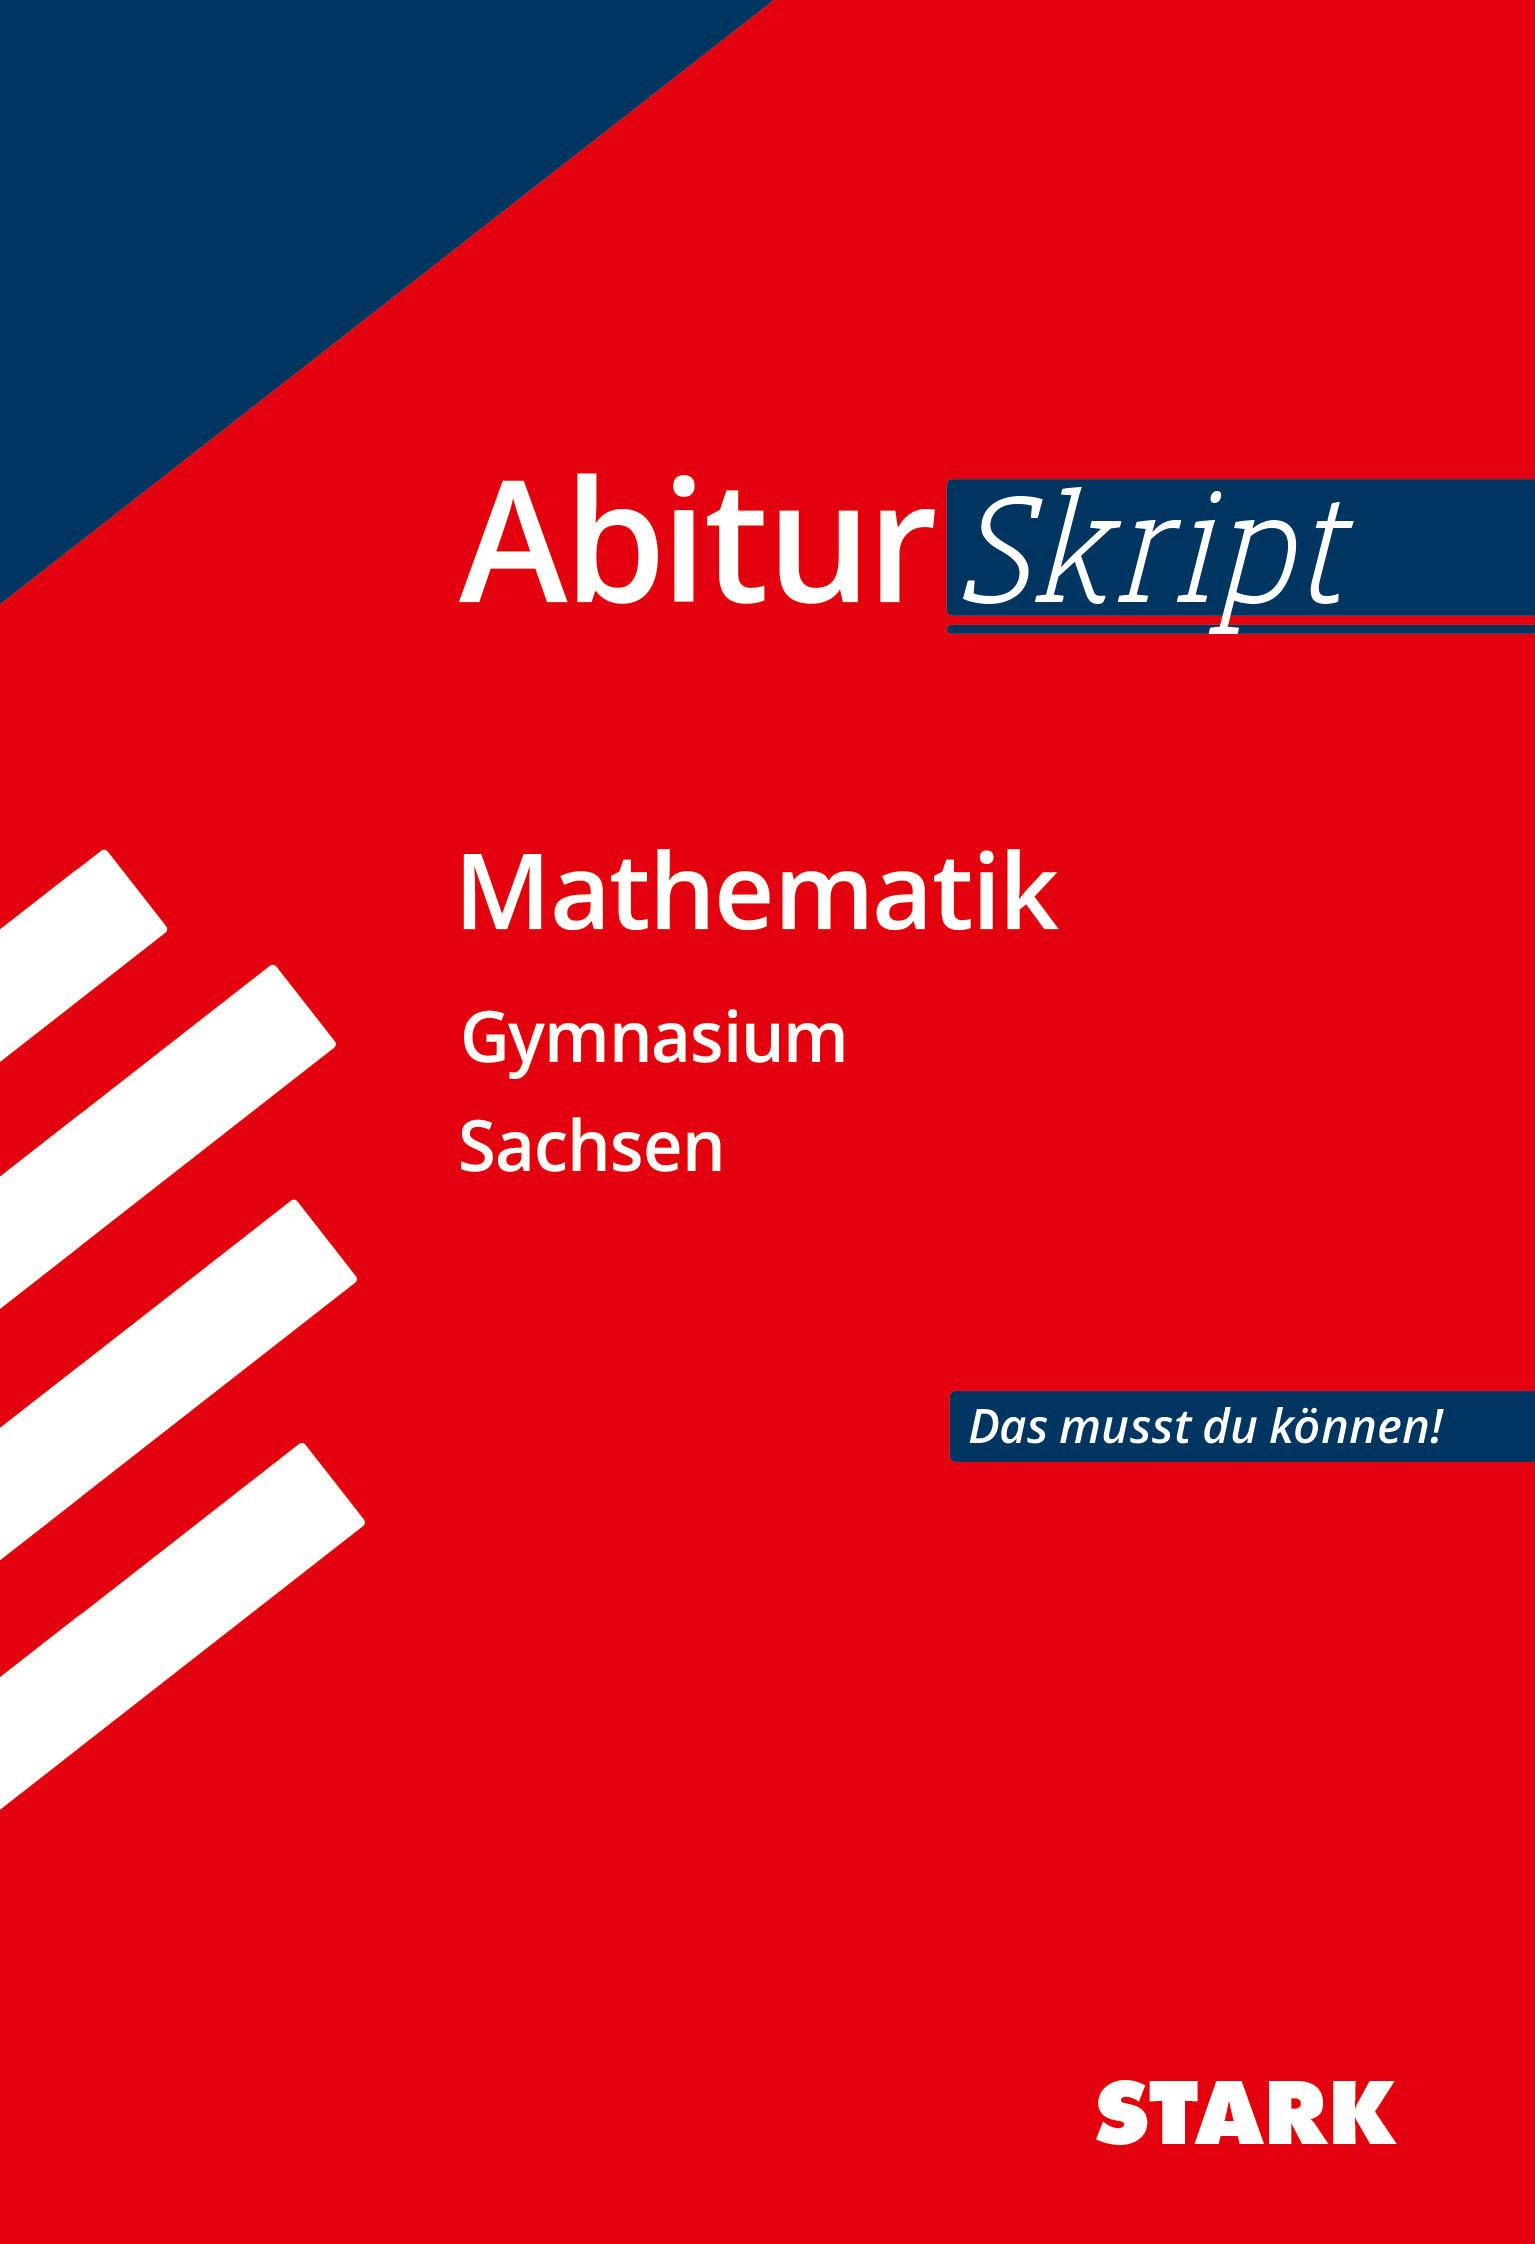 STARK AbiturSkript - Mathematik - Sachsen